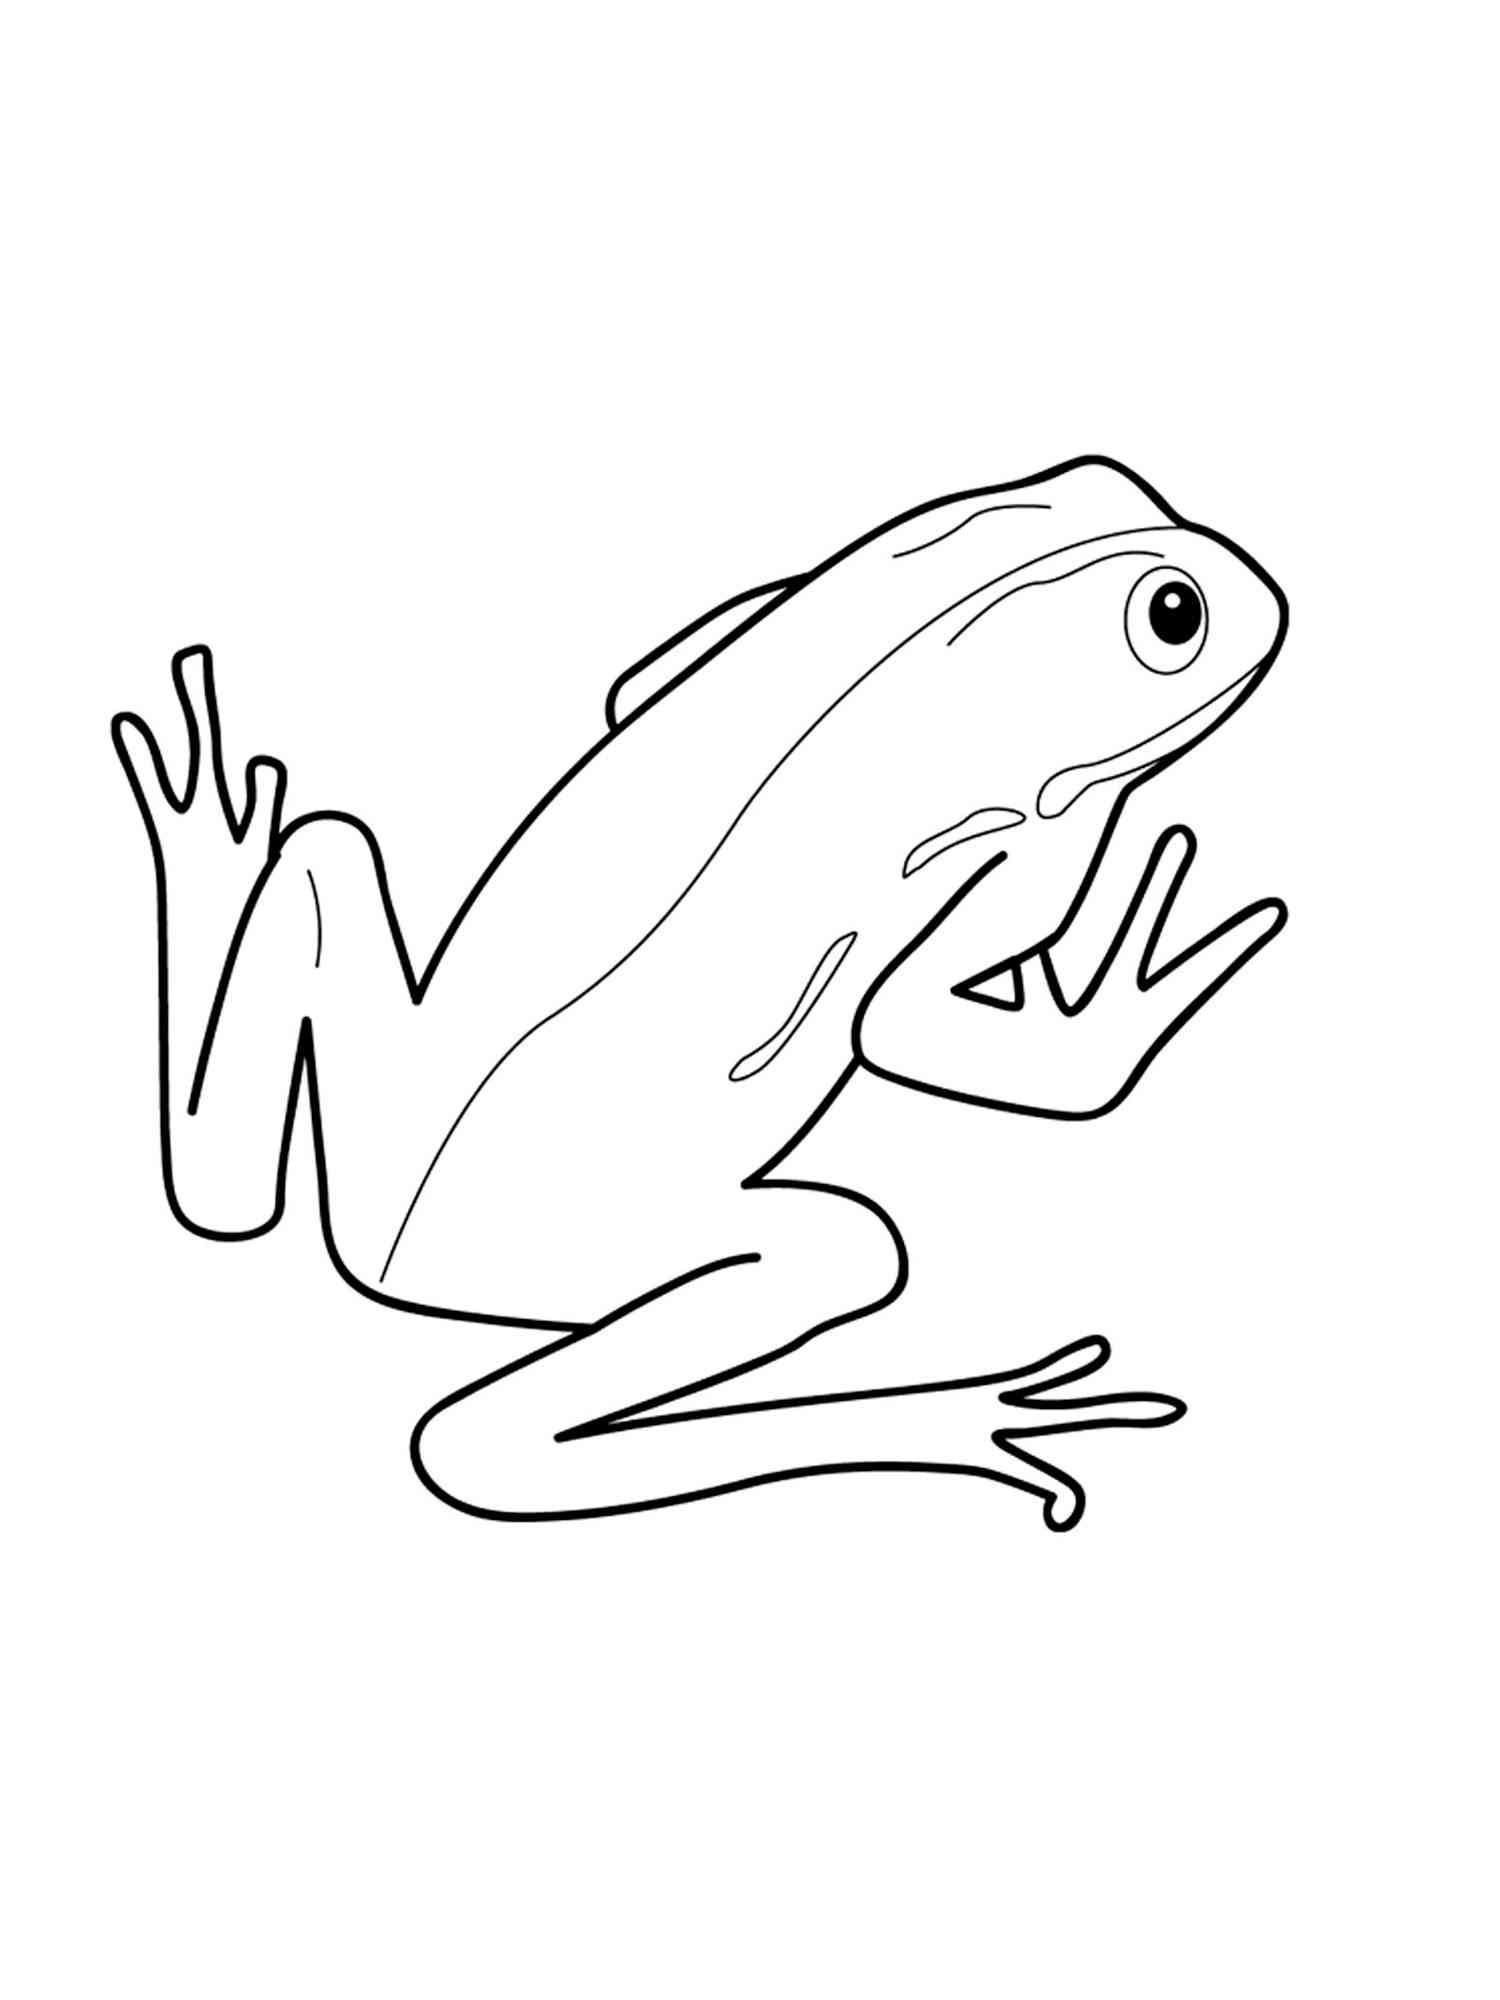 Amphibian 1 coloring page